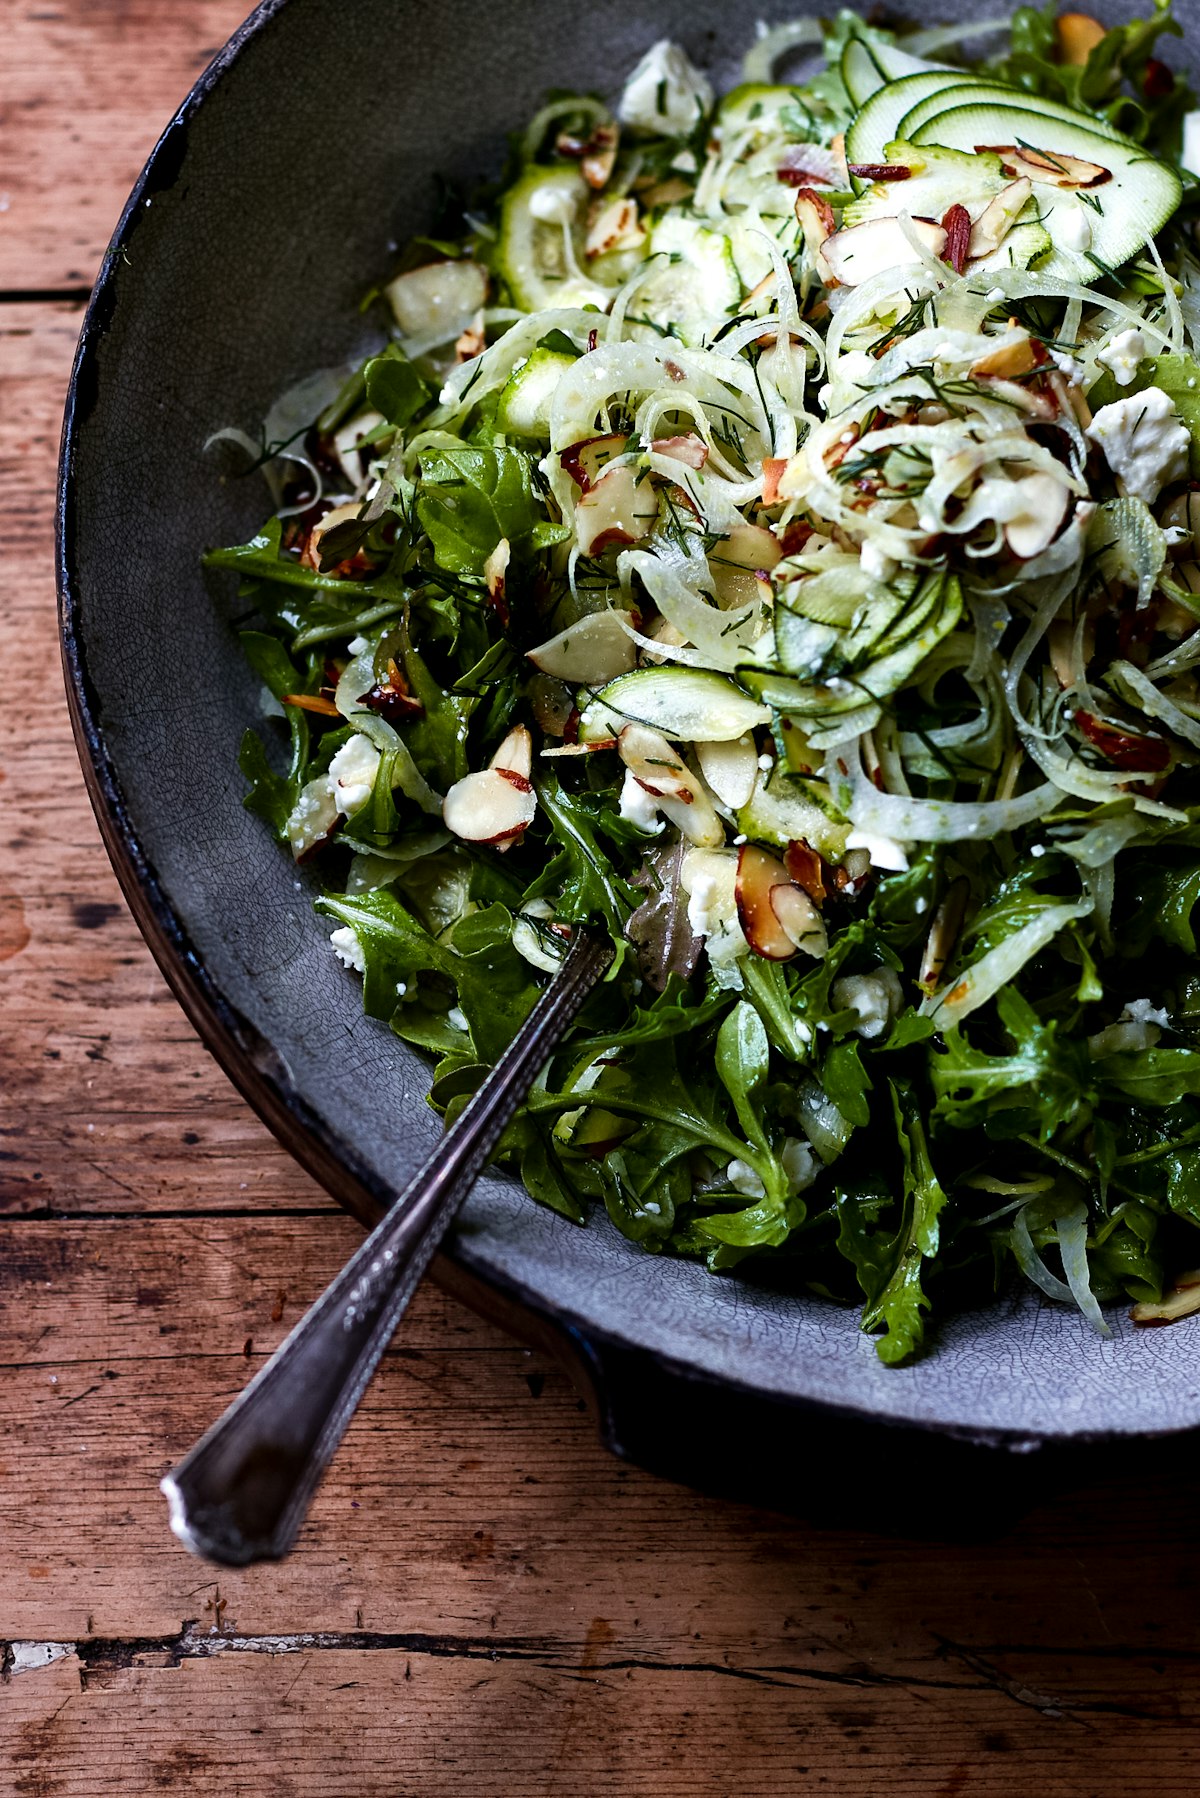 https://images.101cookbooks.com/fennel-salad-recipe-23-v.jpg?w=1200&auto=format